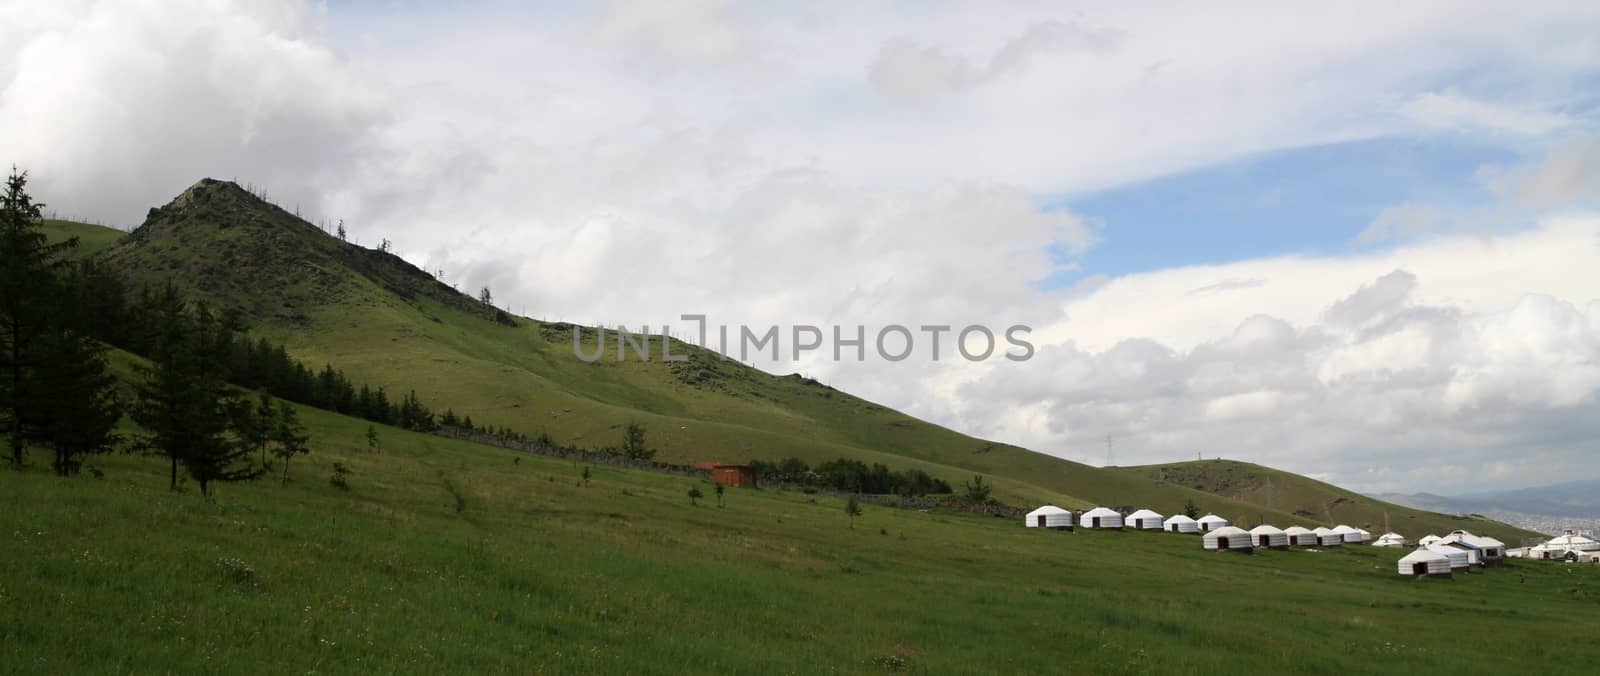 Mongolian Yurts near capital town Ullanbaator in Mongolia